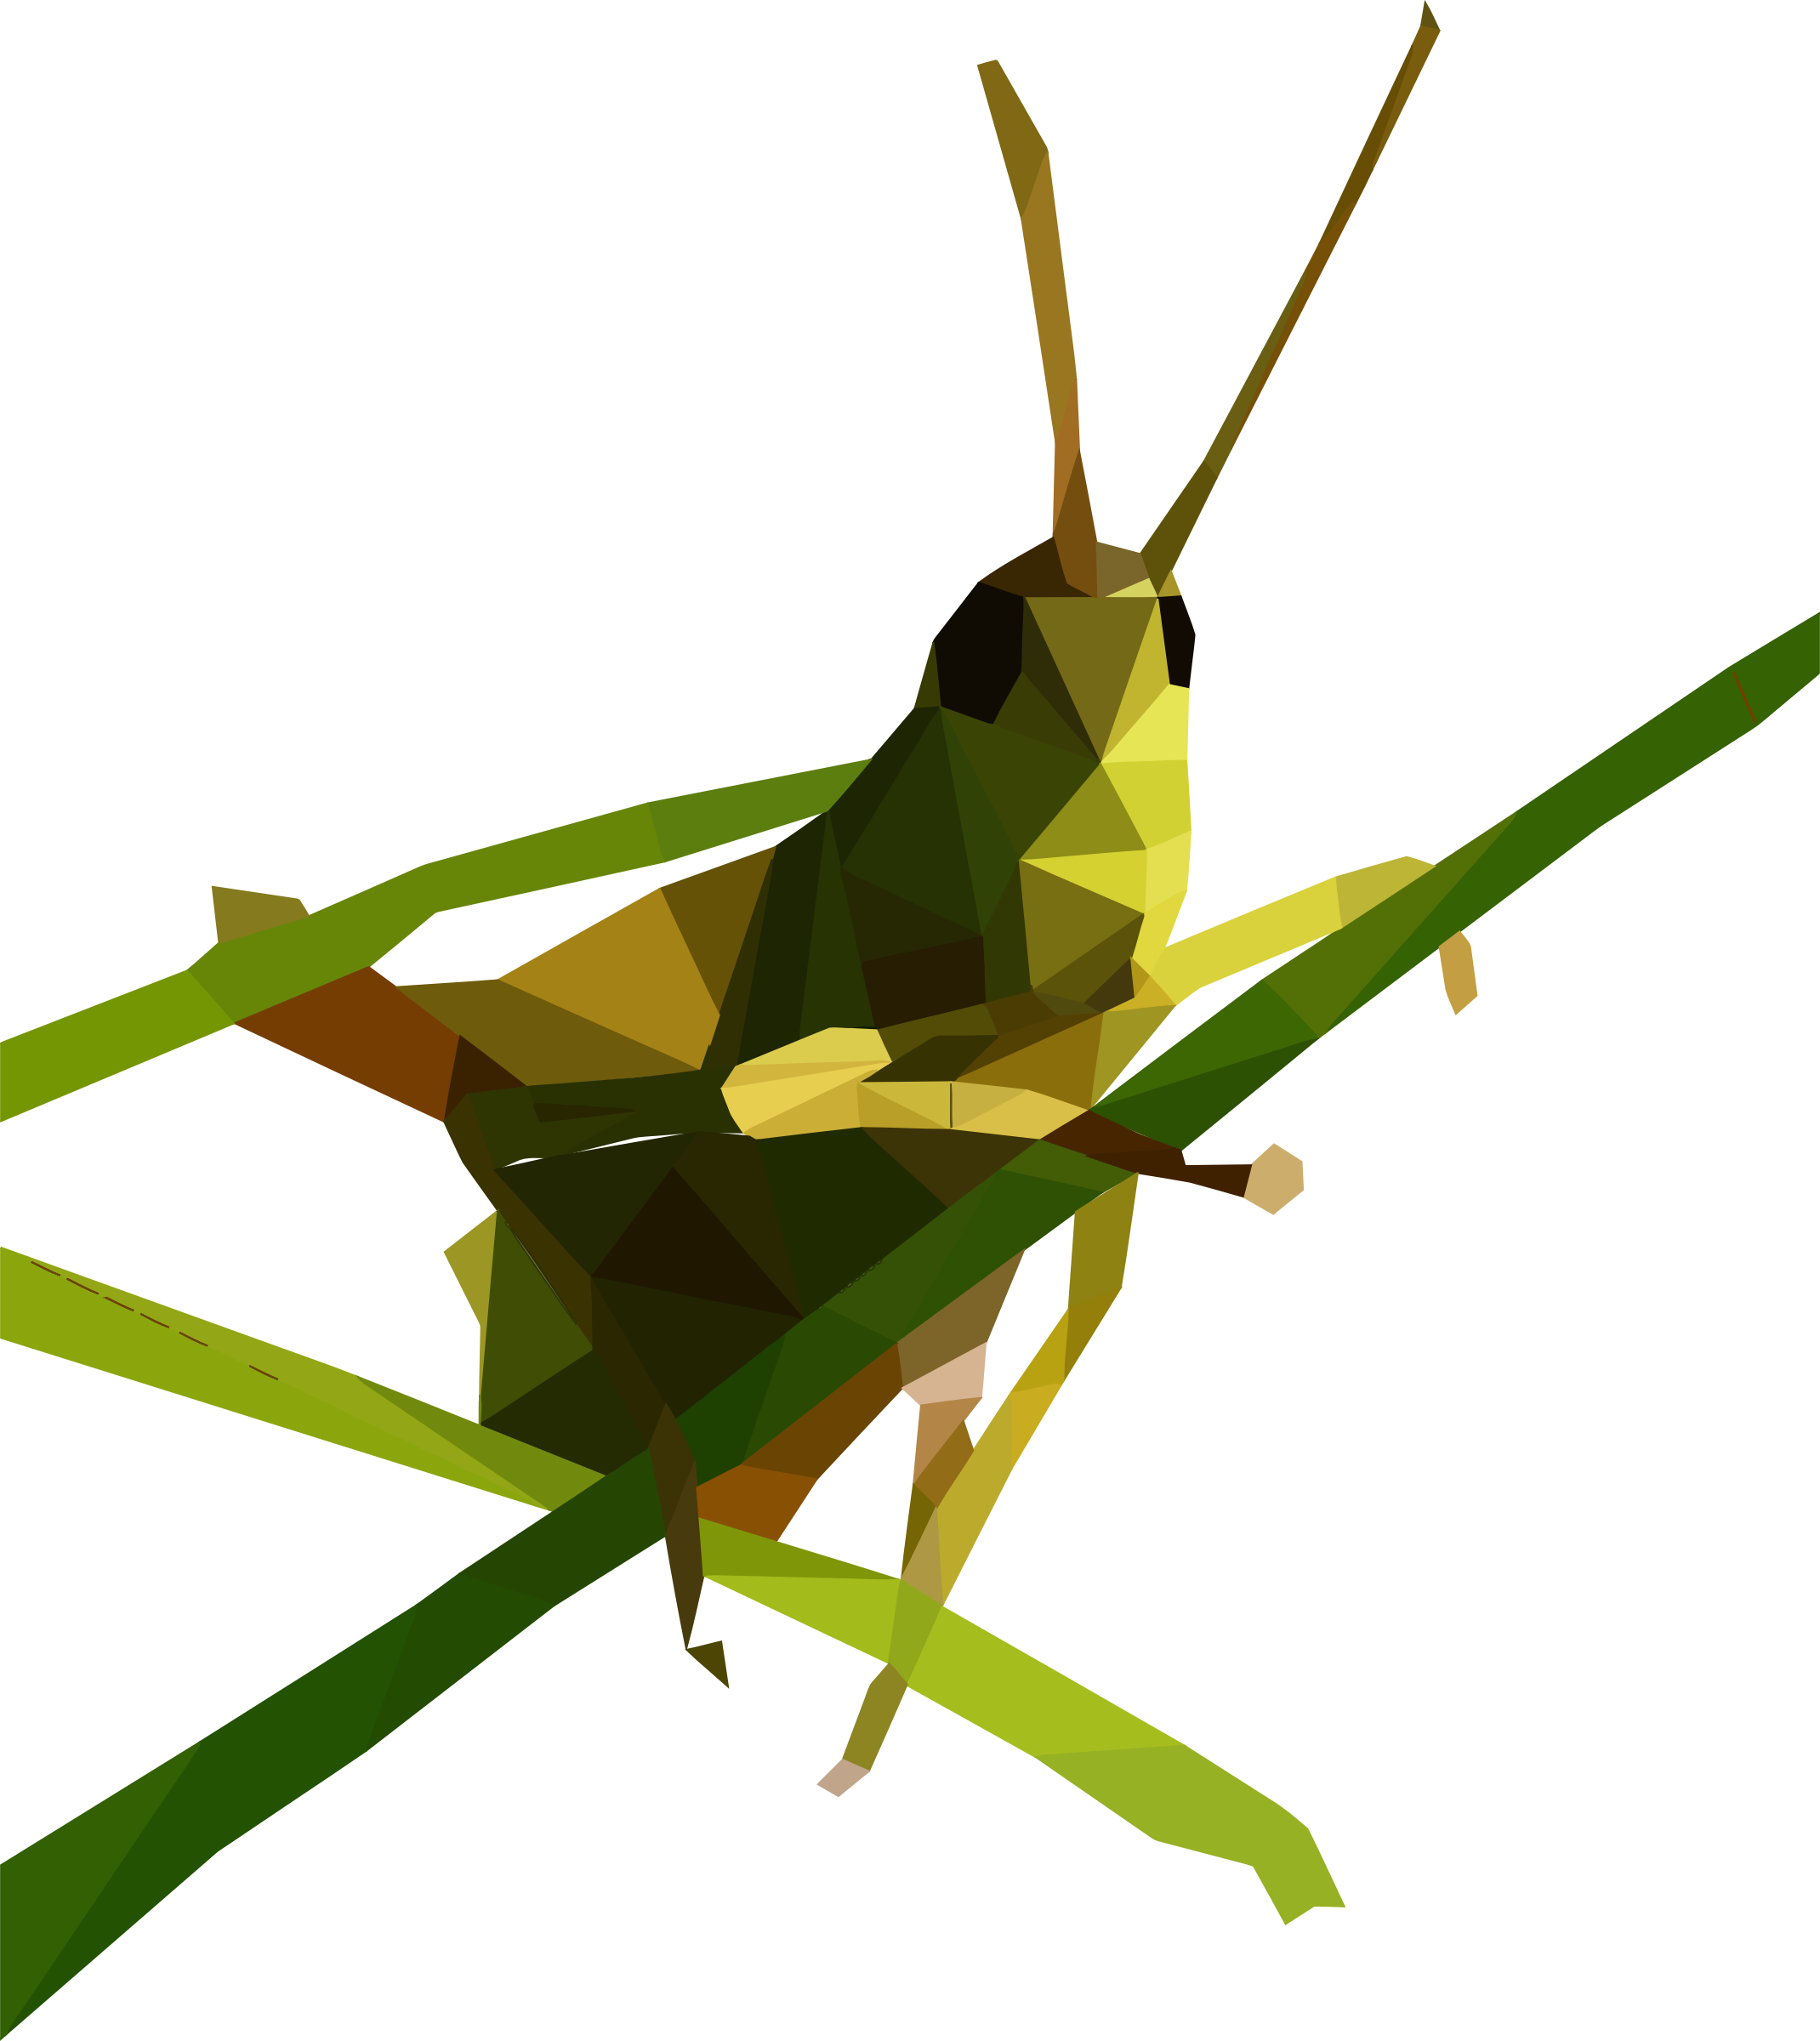 Grasshopper PNG Free Download